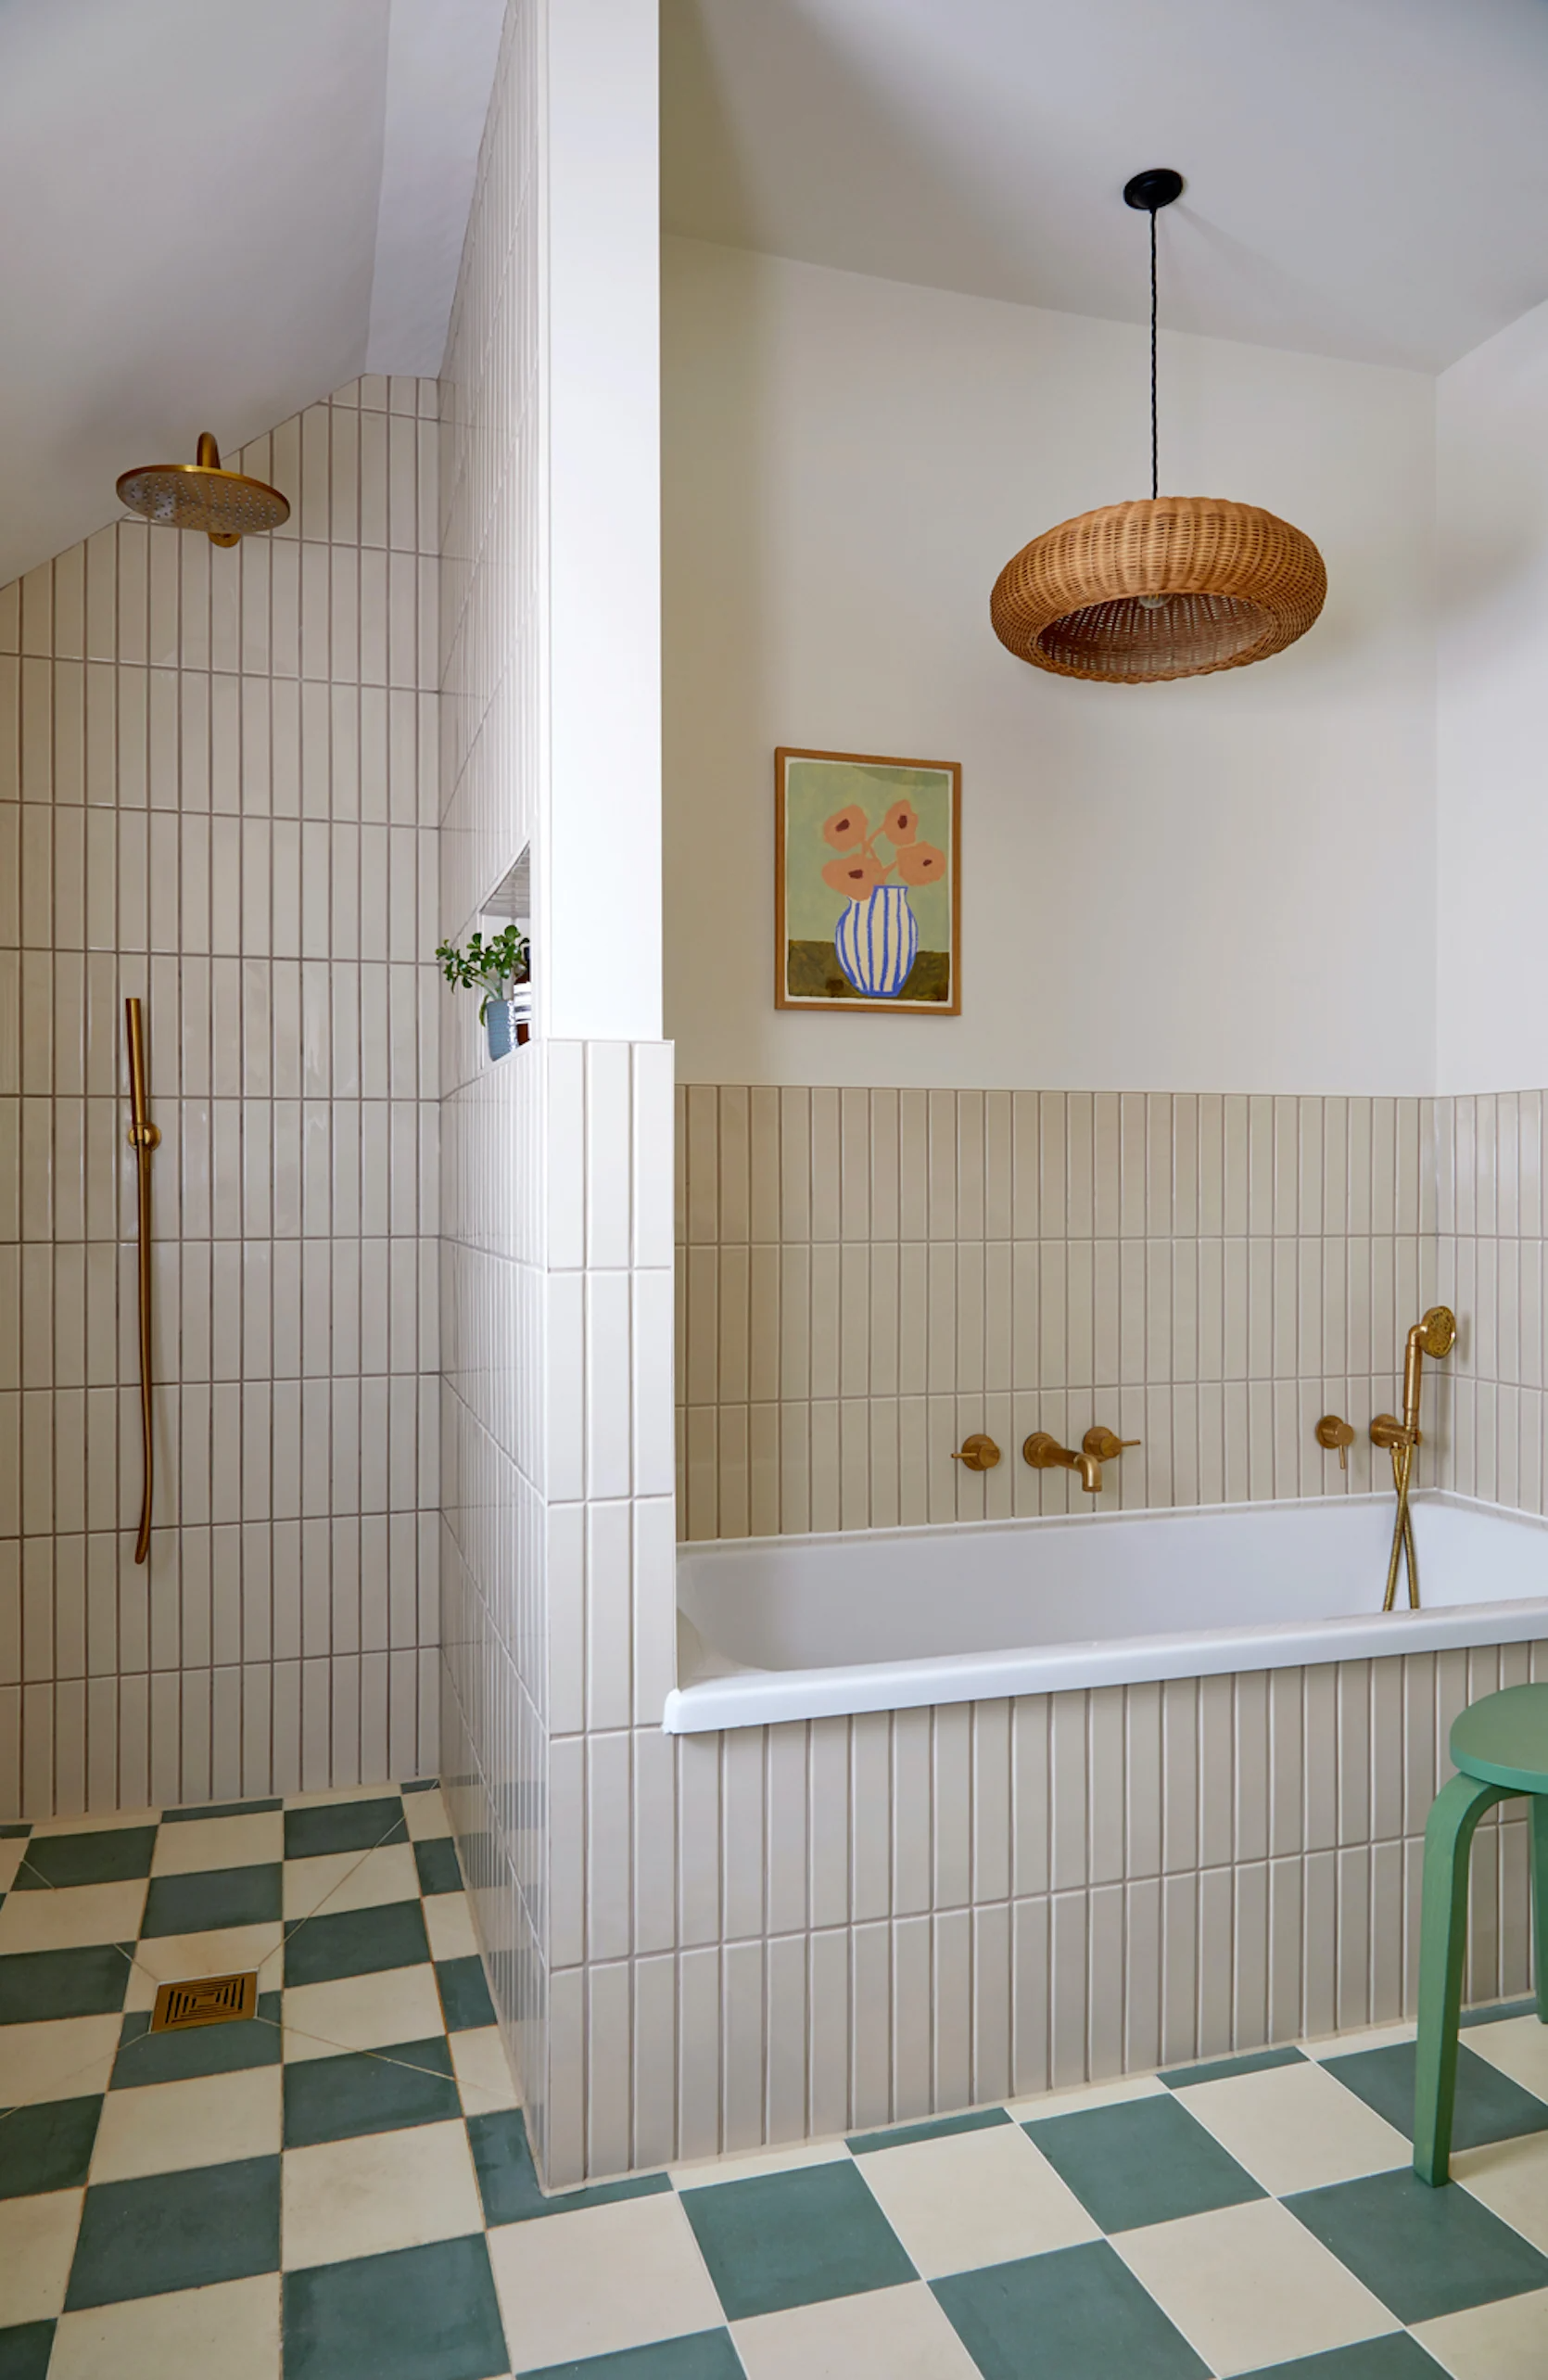 Transform Your Space with Stylish Bathroom Decor Ideas